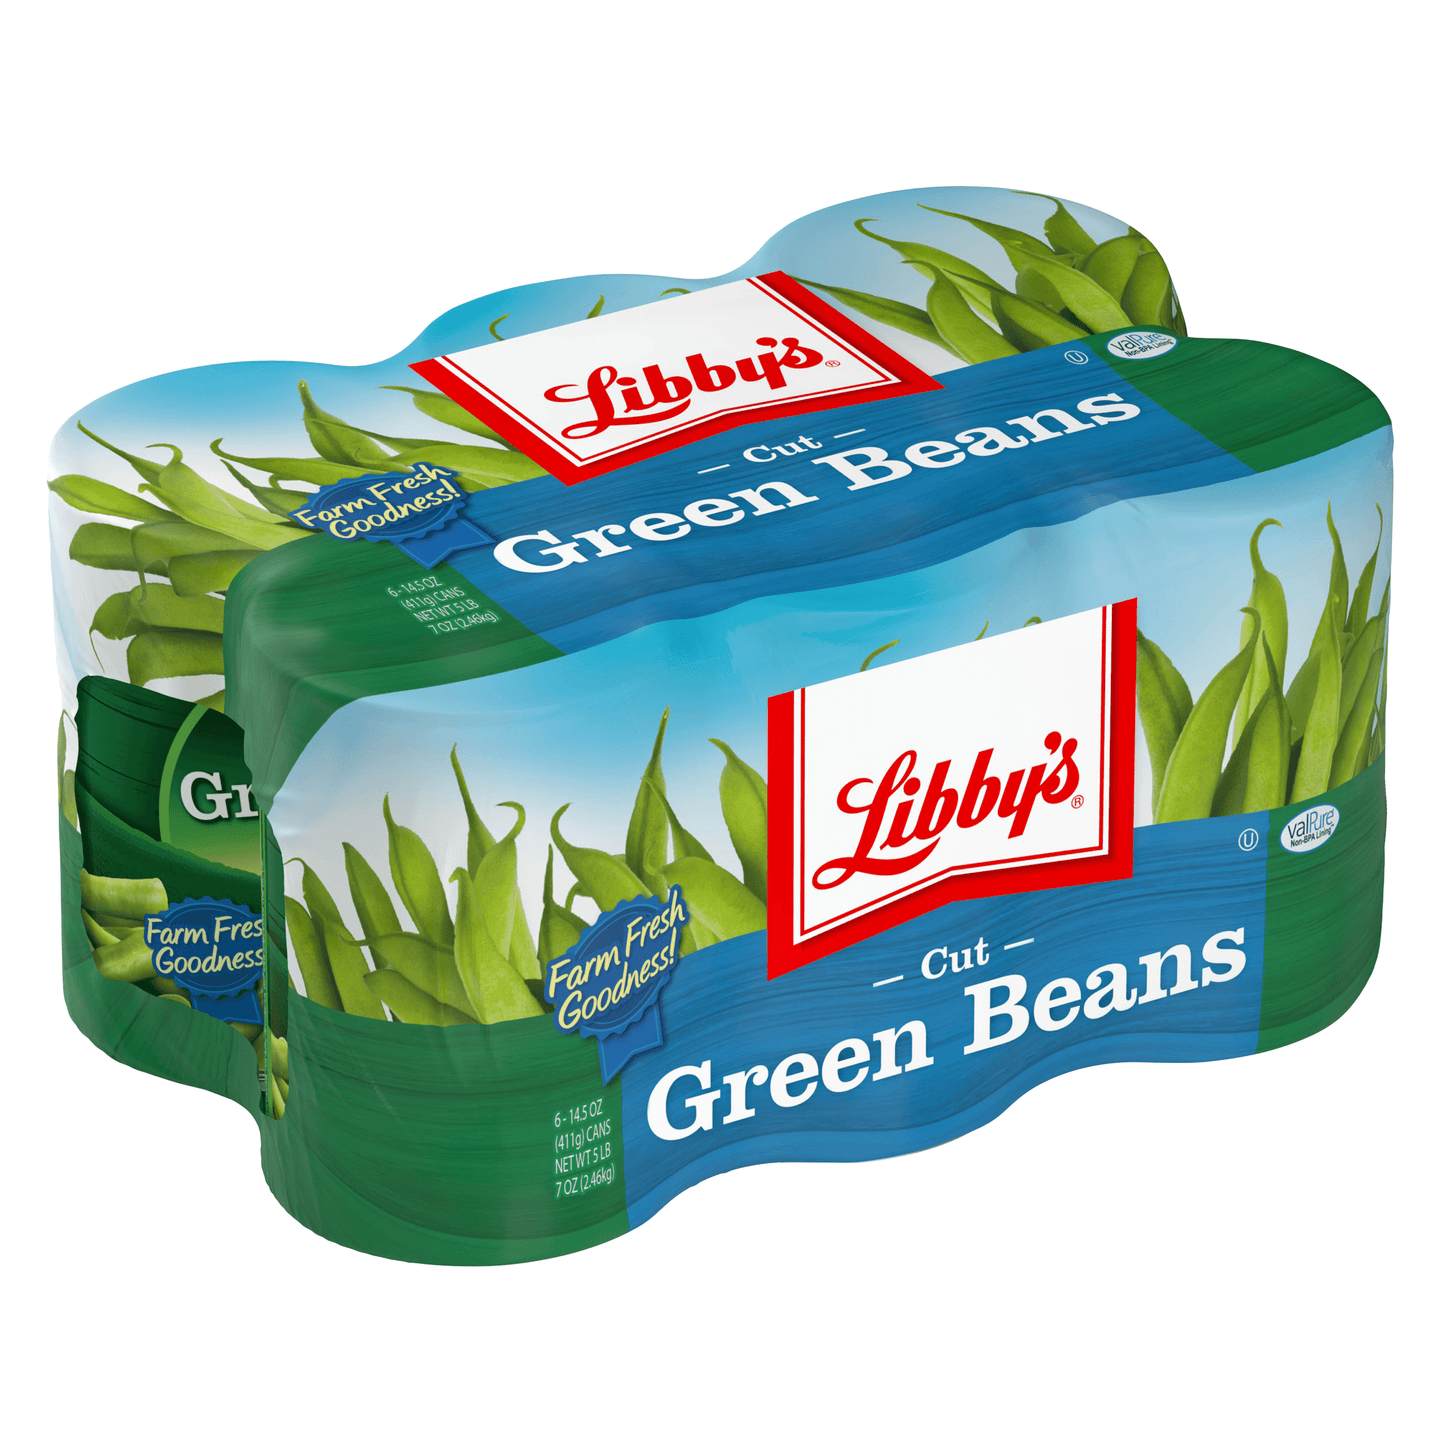 Libby's Cut Green Beans, 14.5 oz, 6 Cans